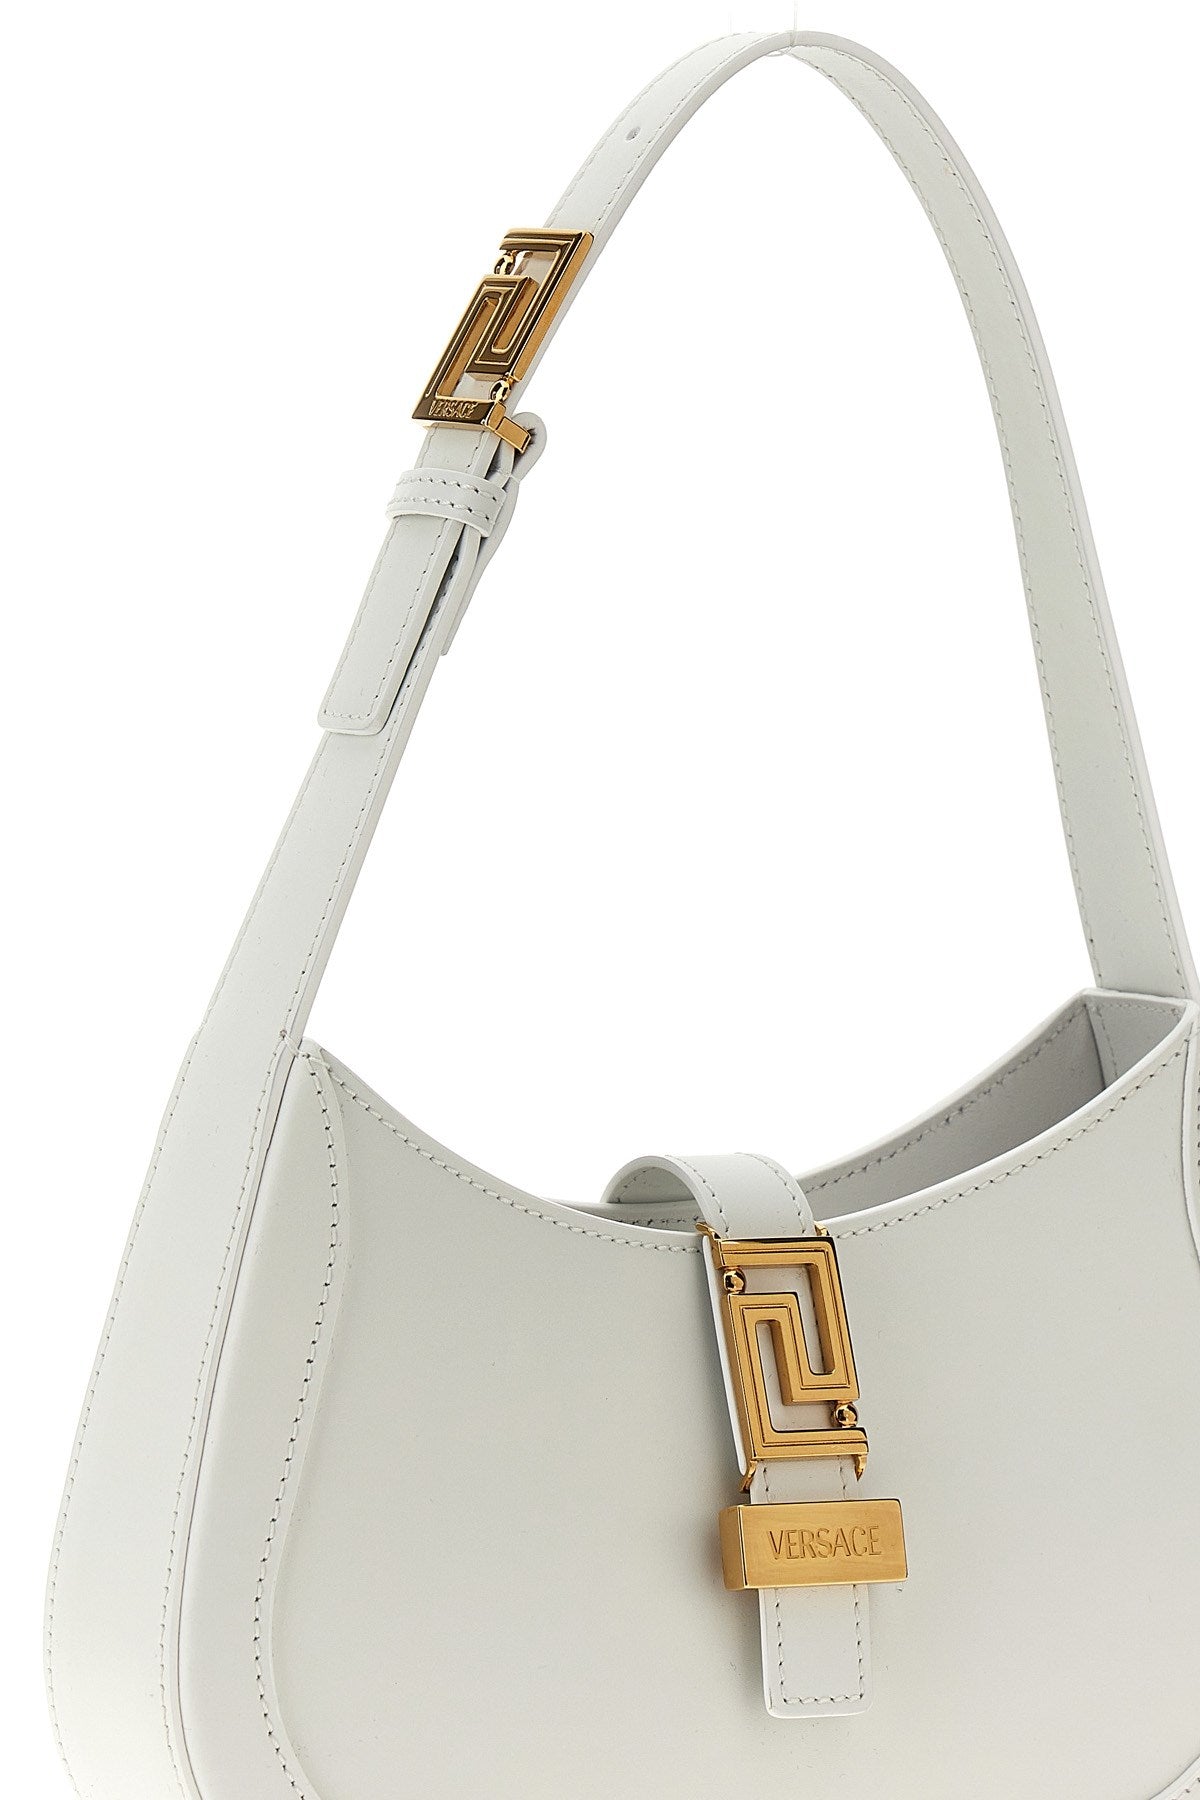 versace 'Greca Goddess' small shoulder bag white